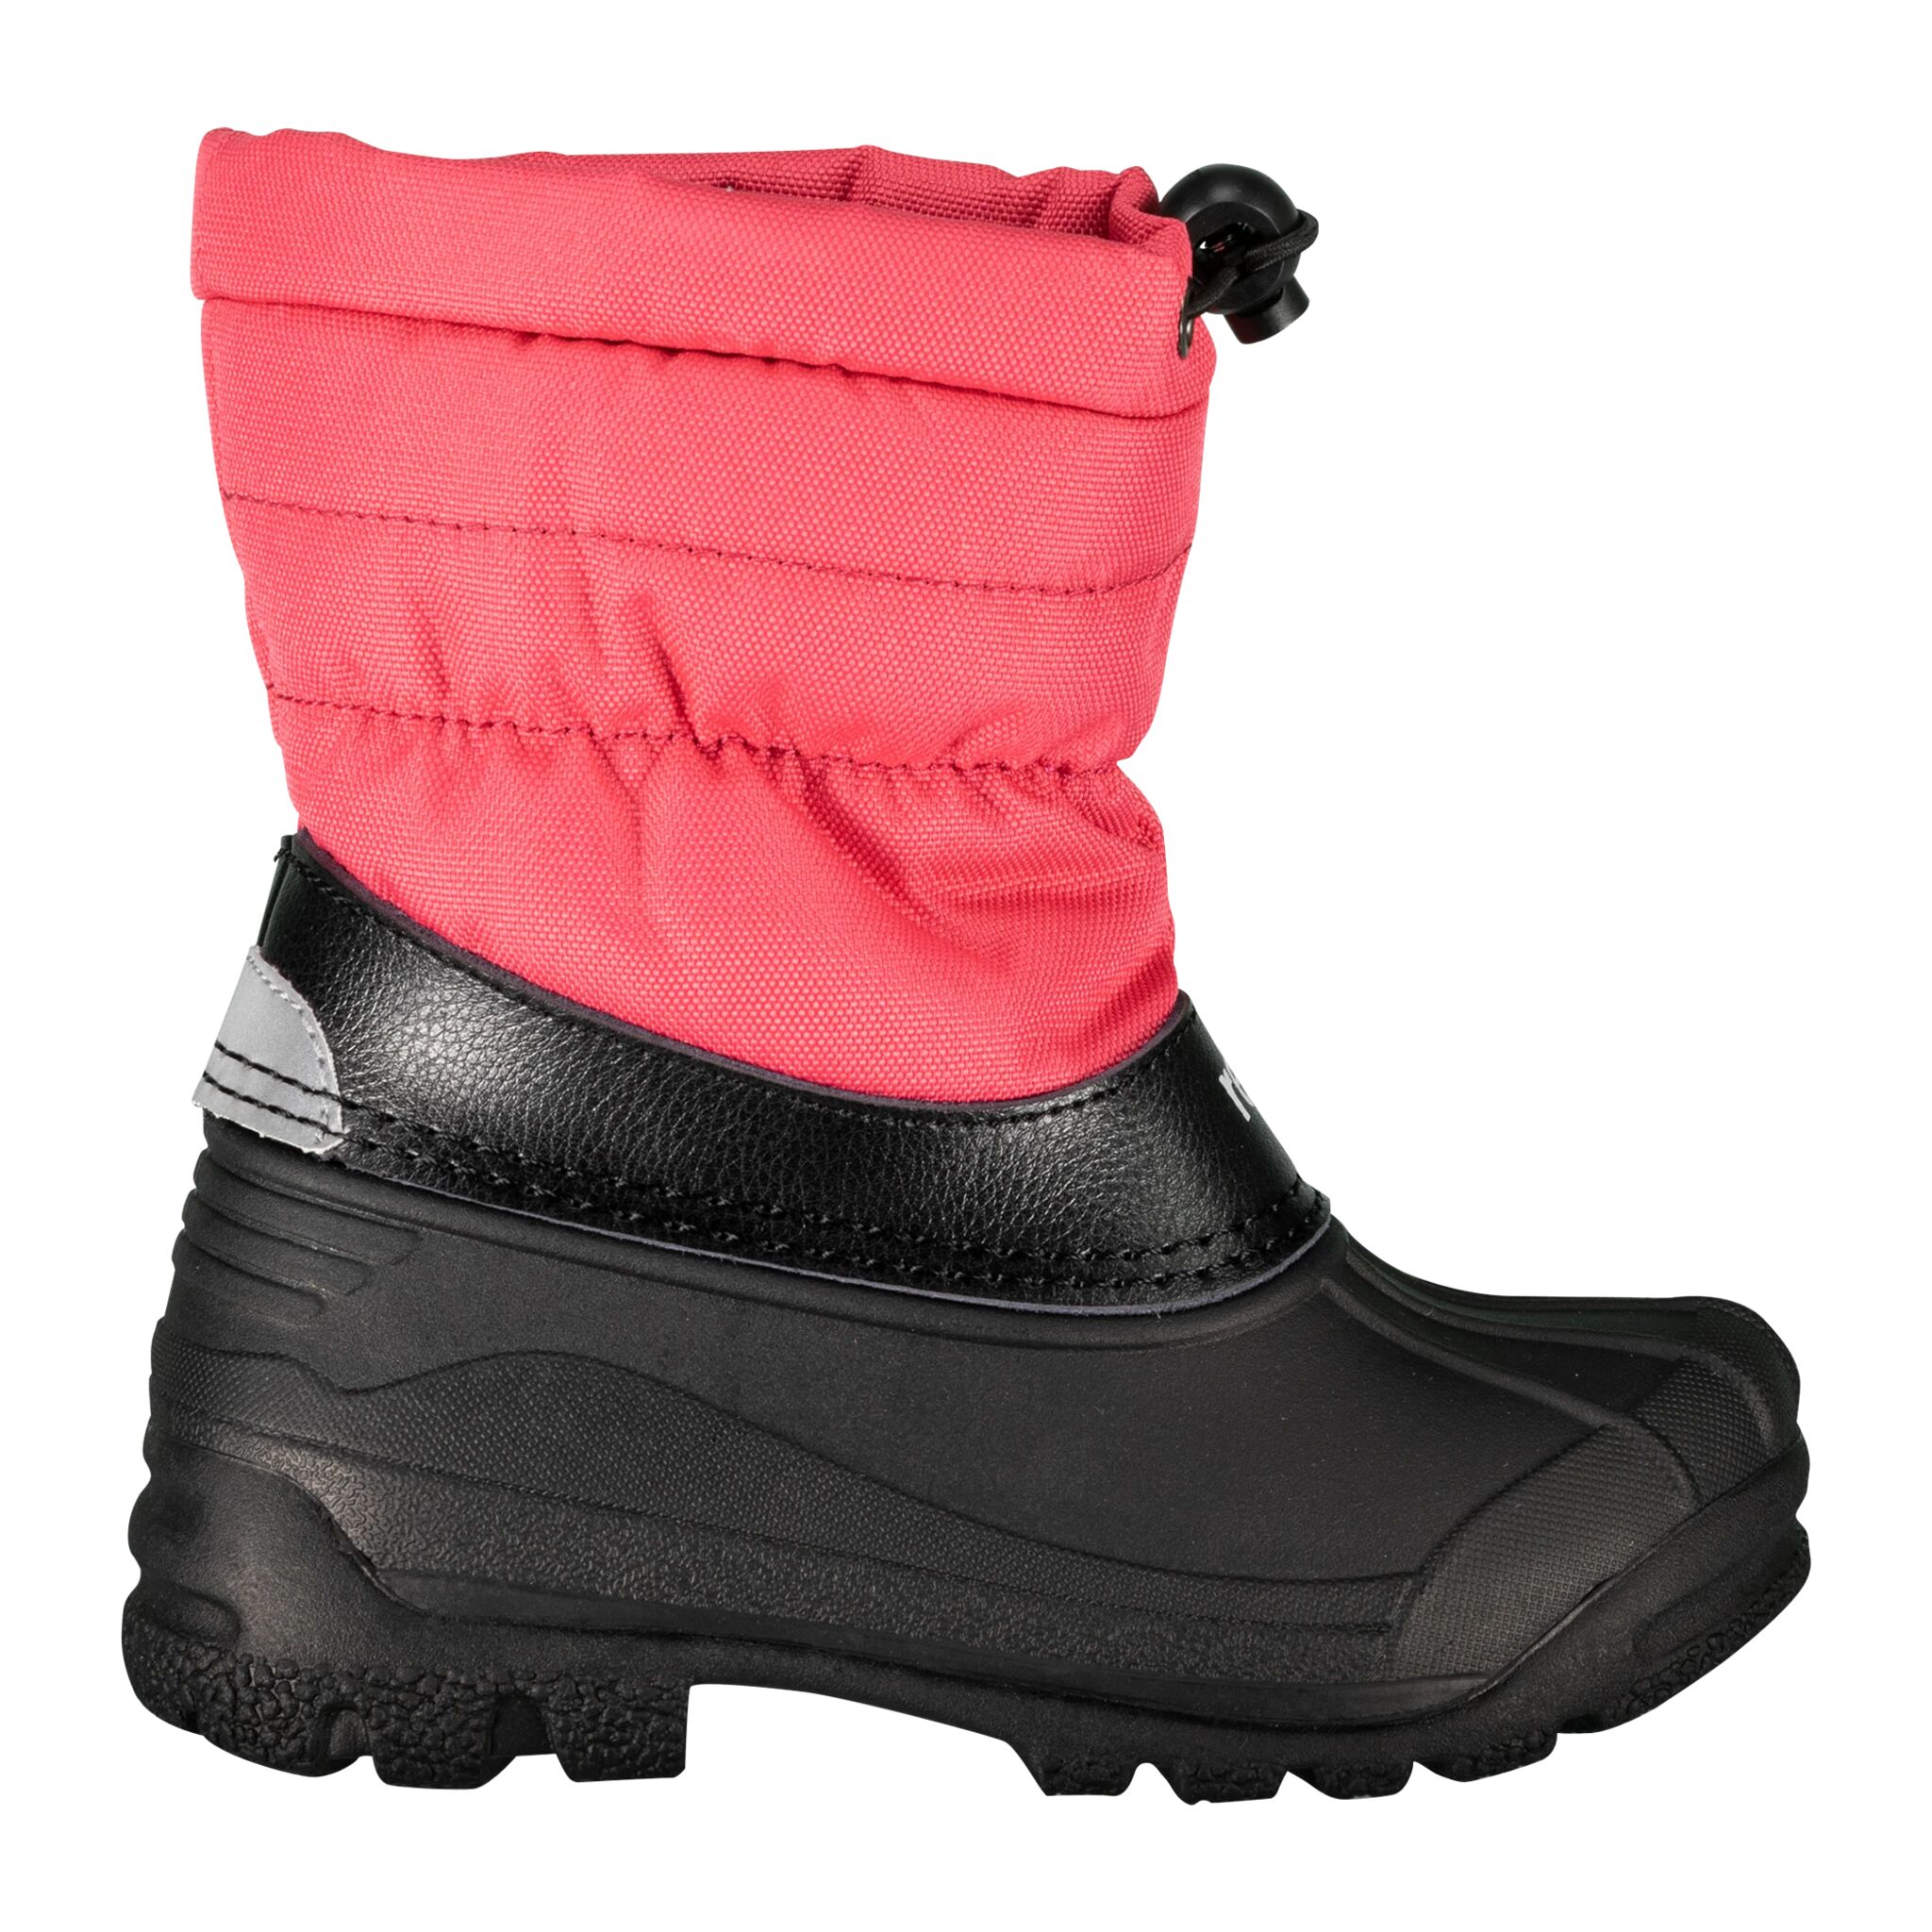 Reima Winter boots Nefar, vintersko barn 34 Azalea Pink